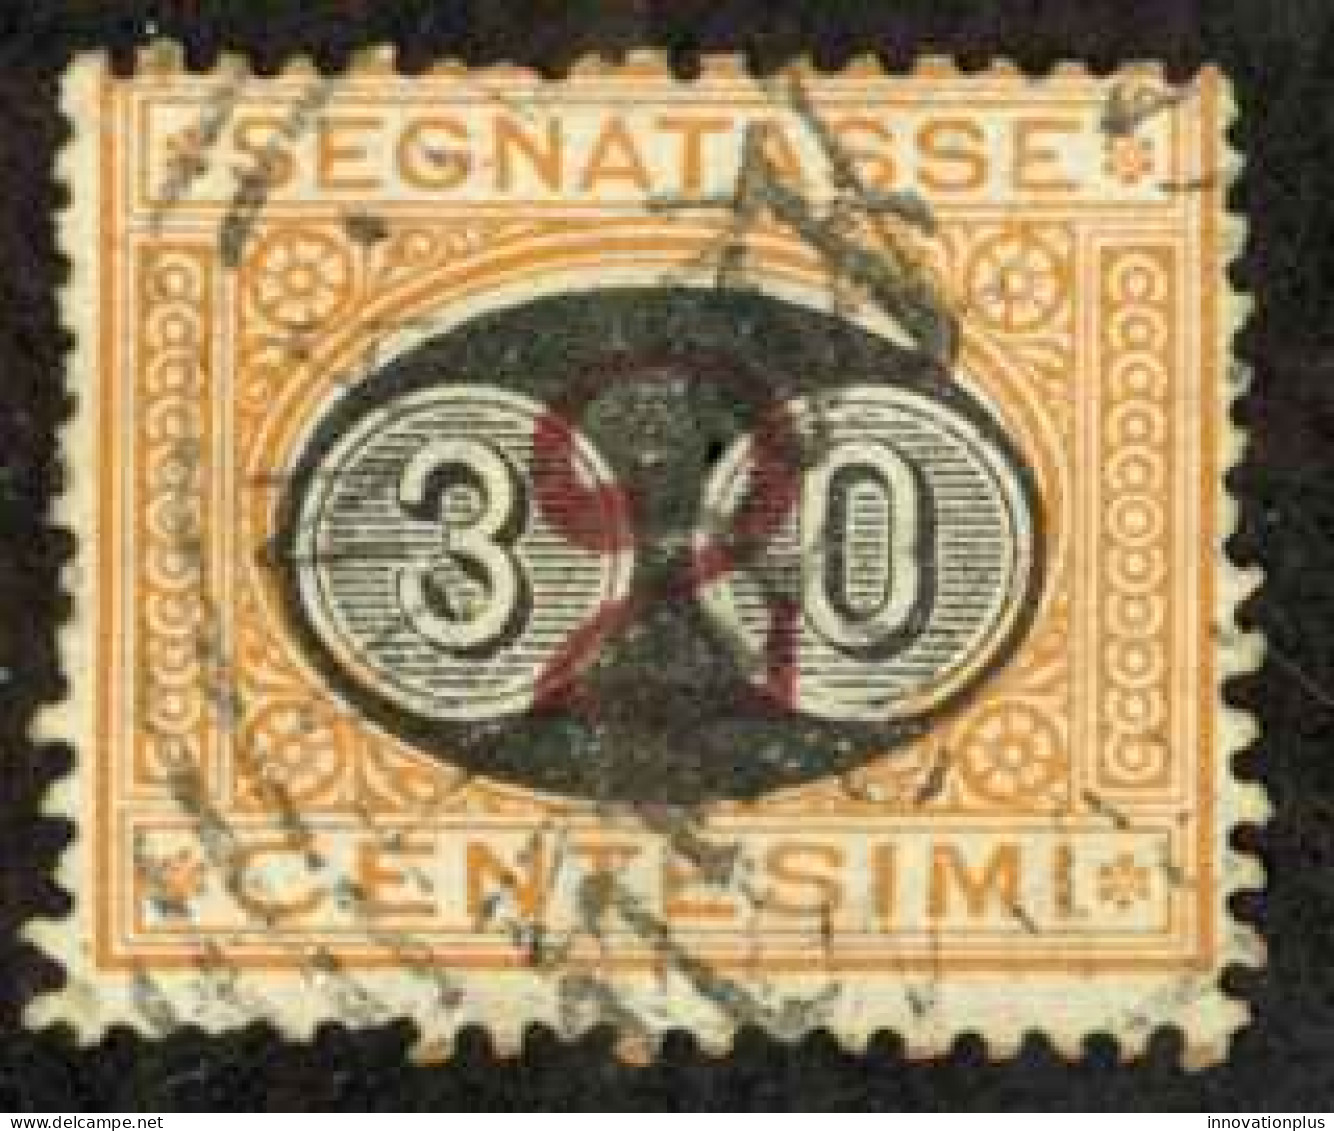 Italy Sc# J27 Used (b) 1890-1891 30c On 2c Postage Due - Taxe